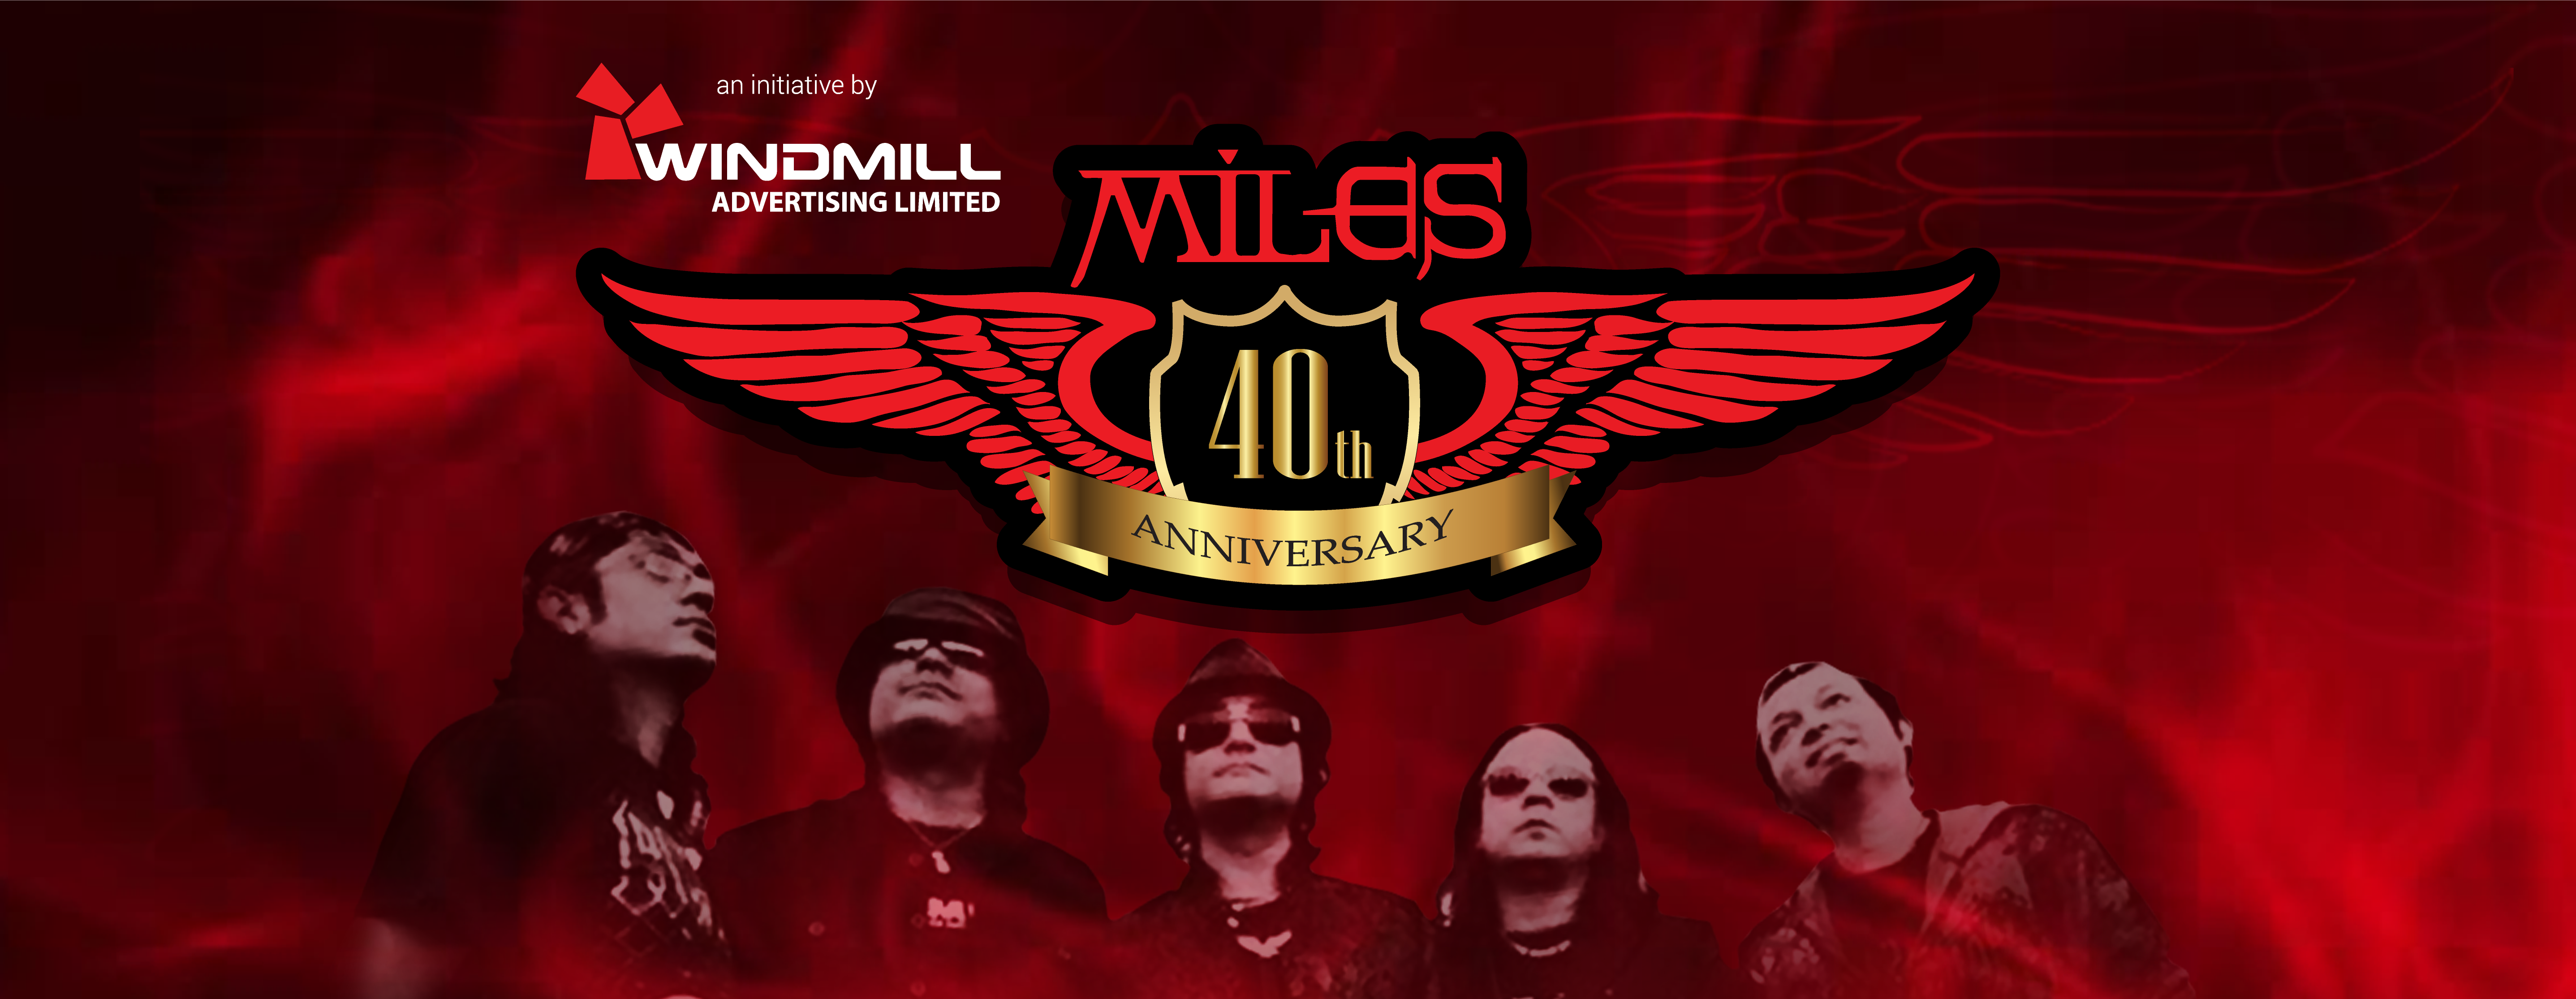 miles-40th-anniversary